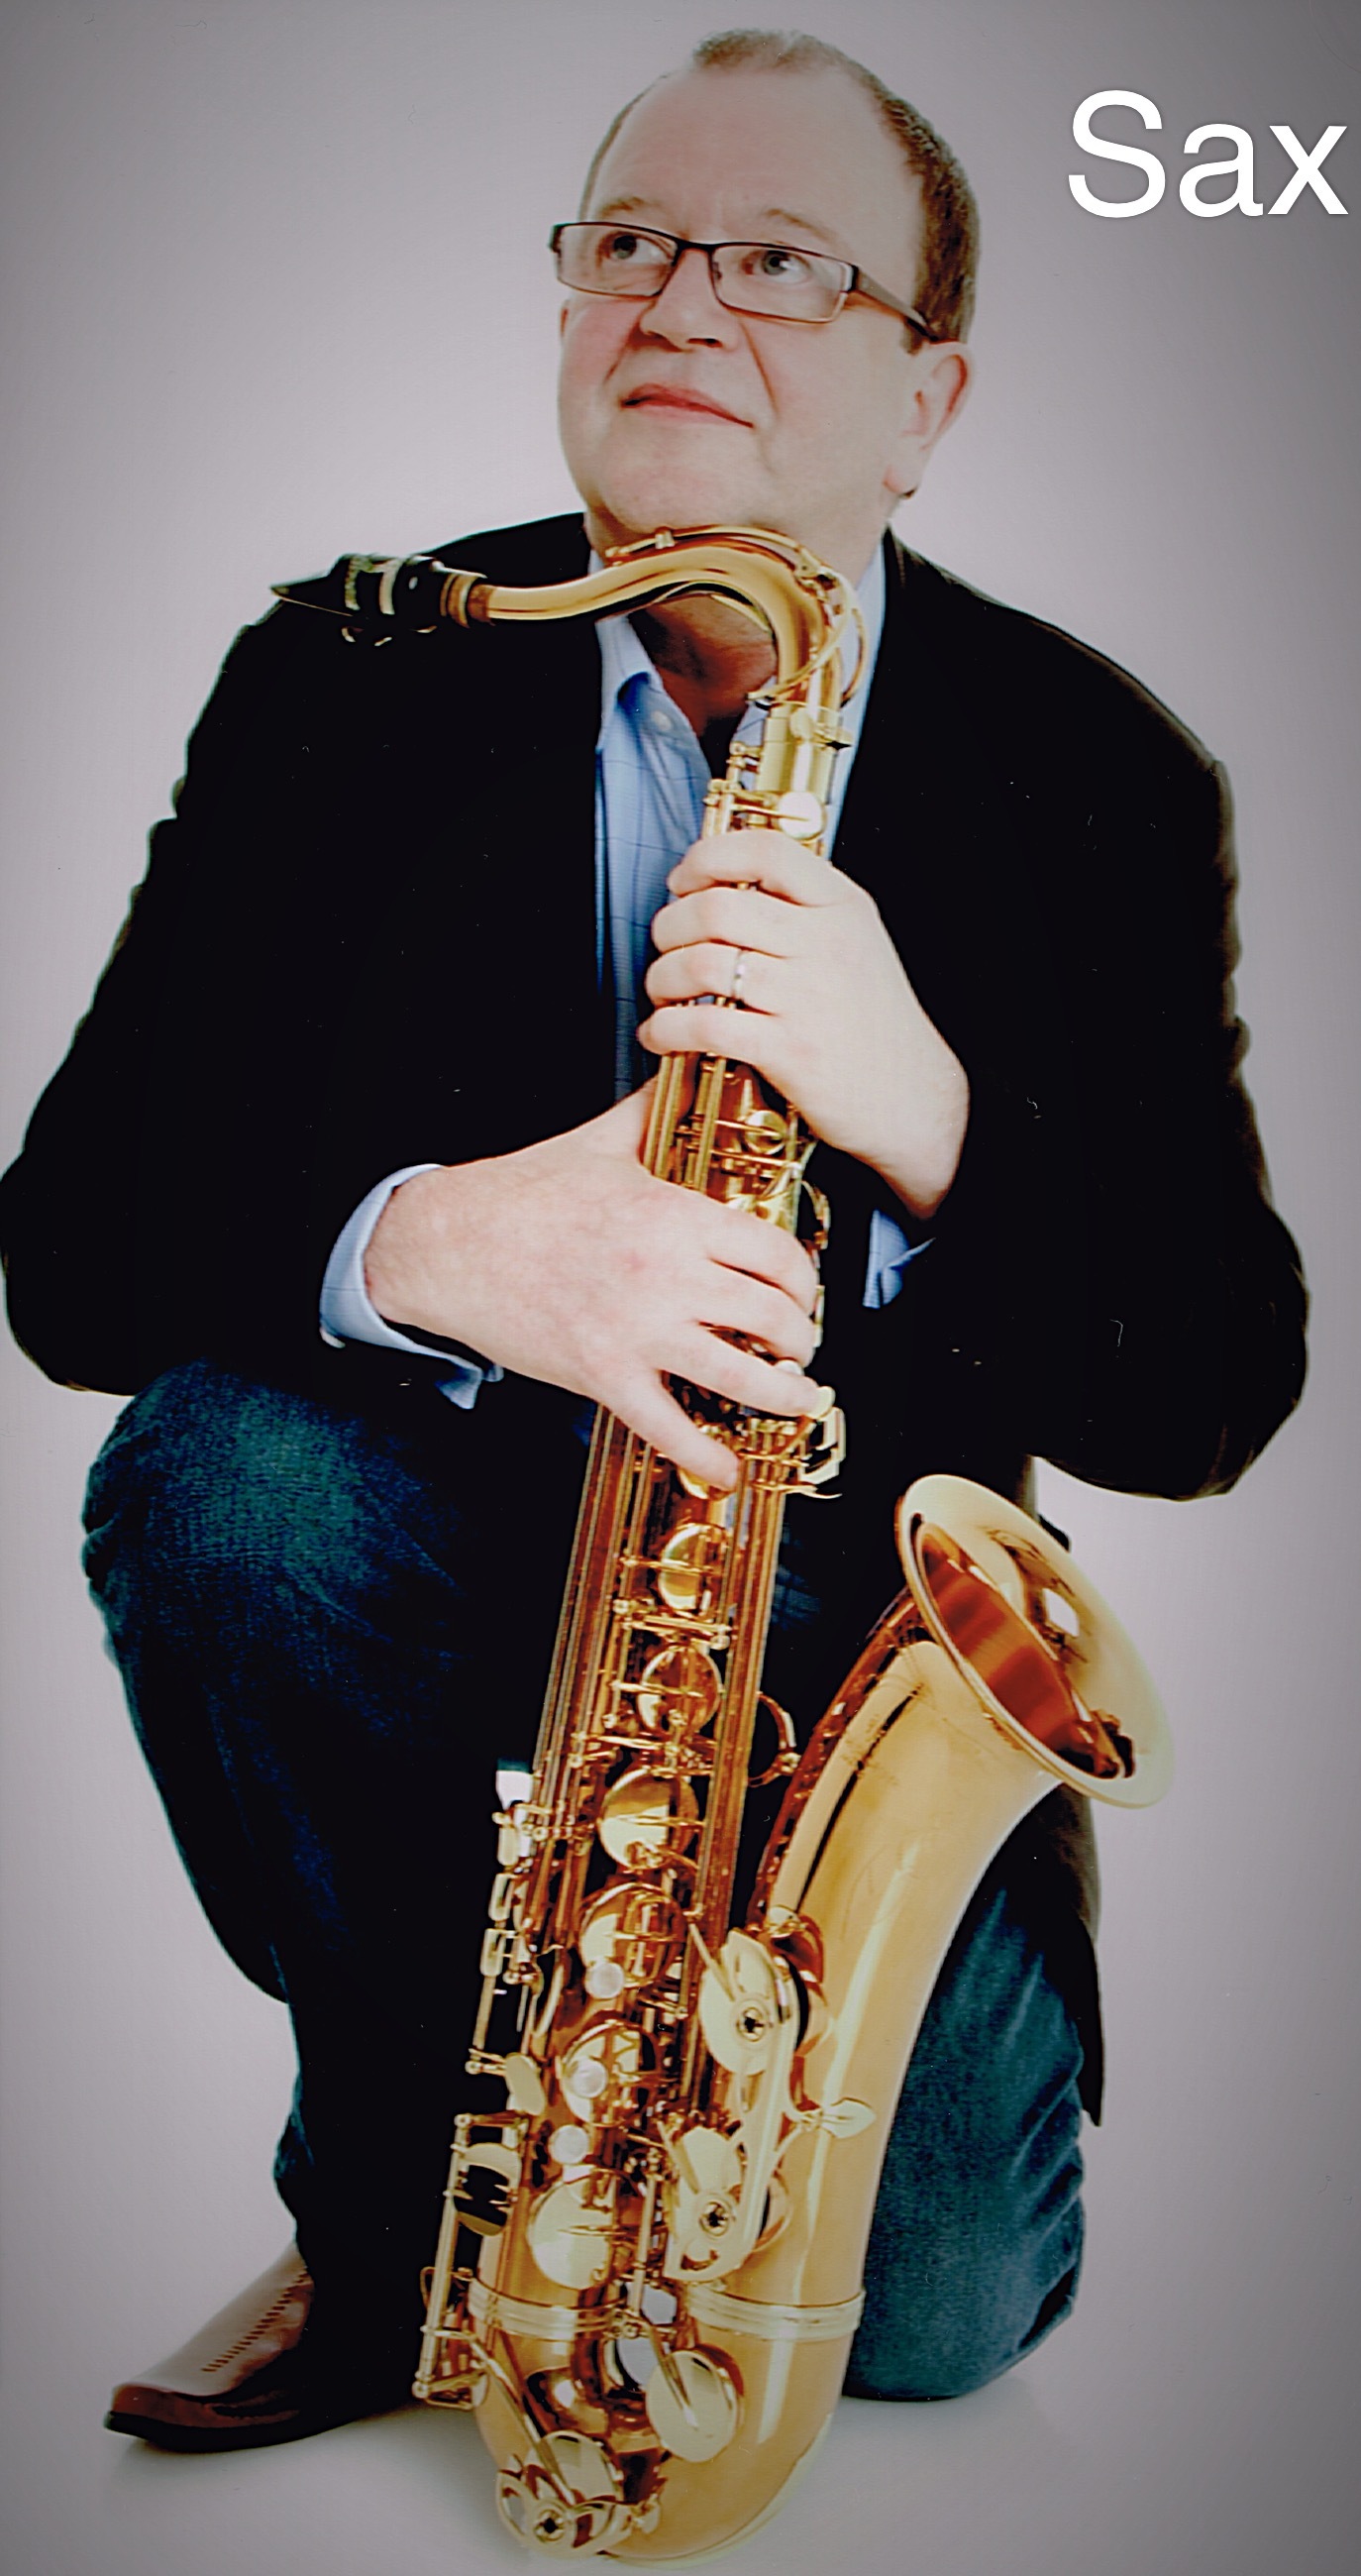 Saxophonist Ken in Scotland